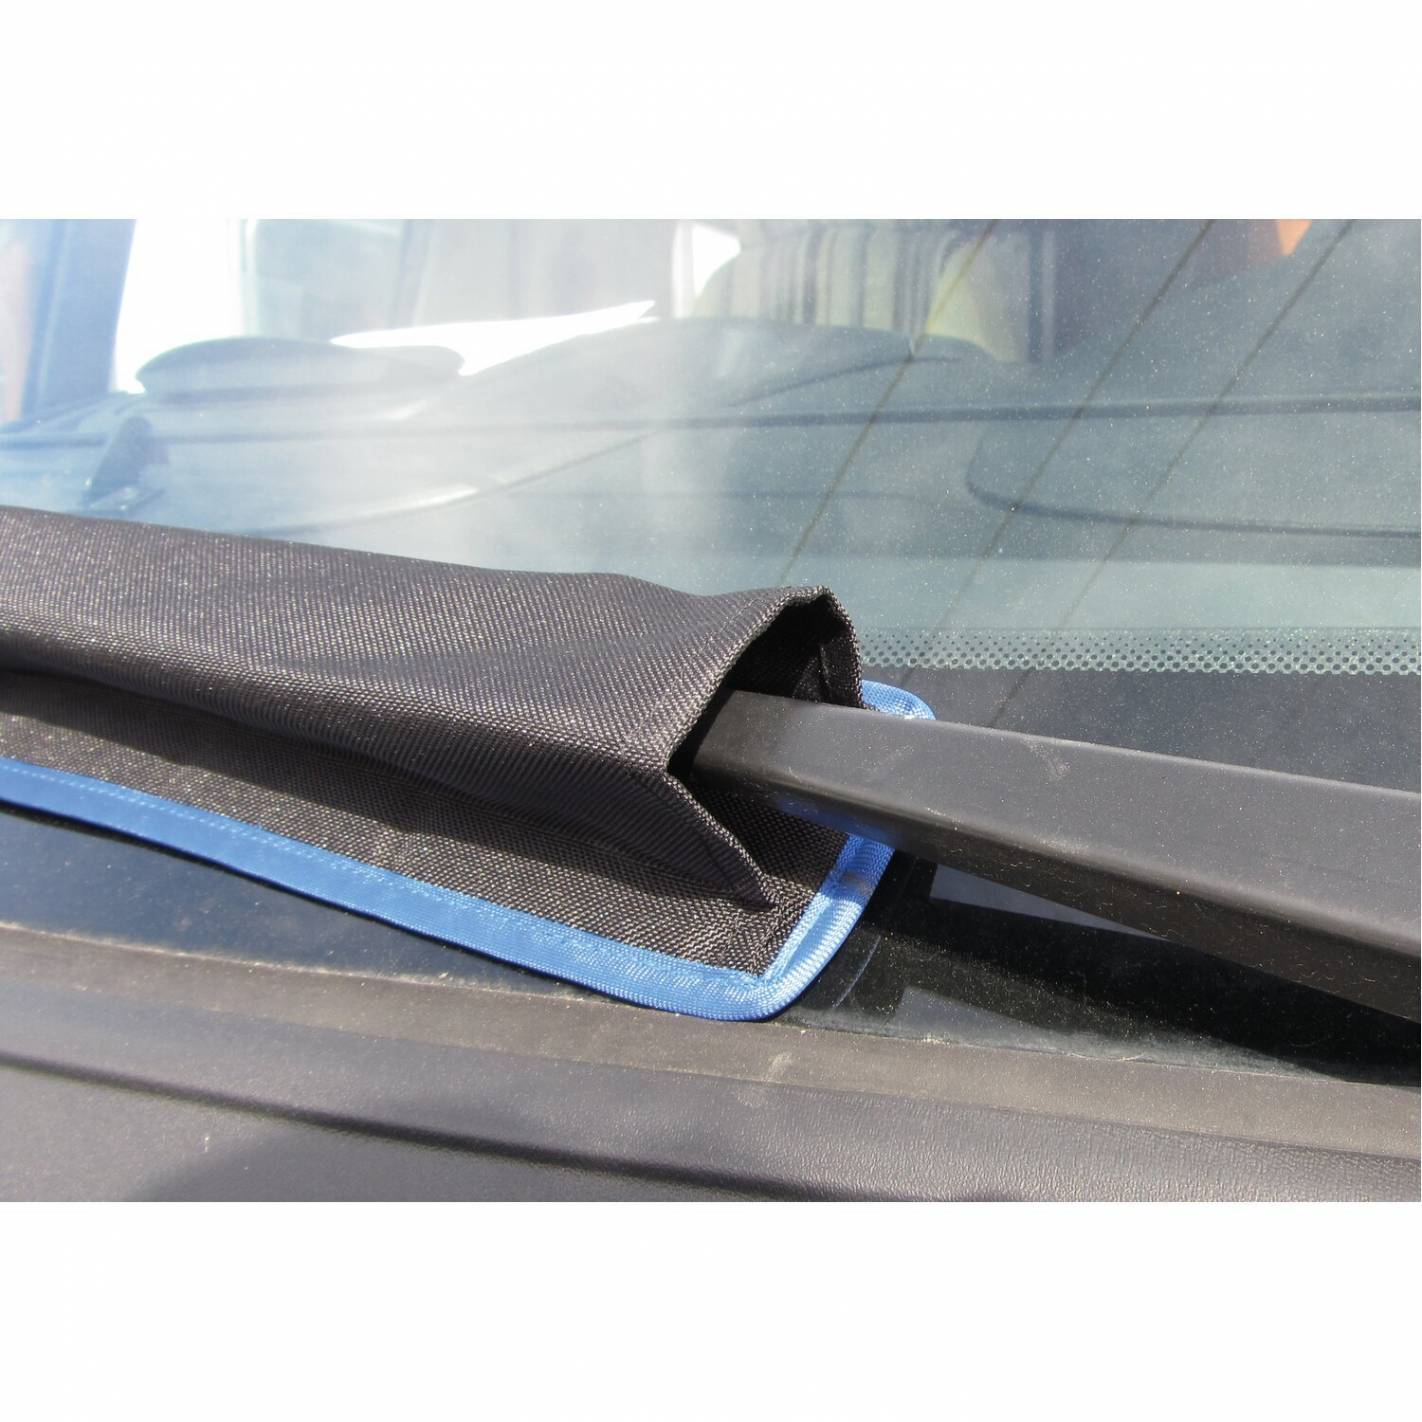 Protège balai essuie-glace pour véhicule - Just4Camper Optima RG